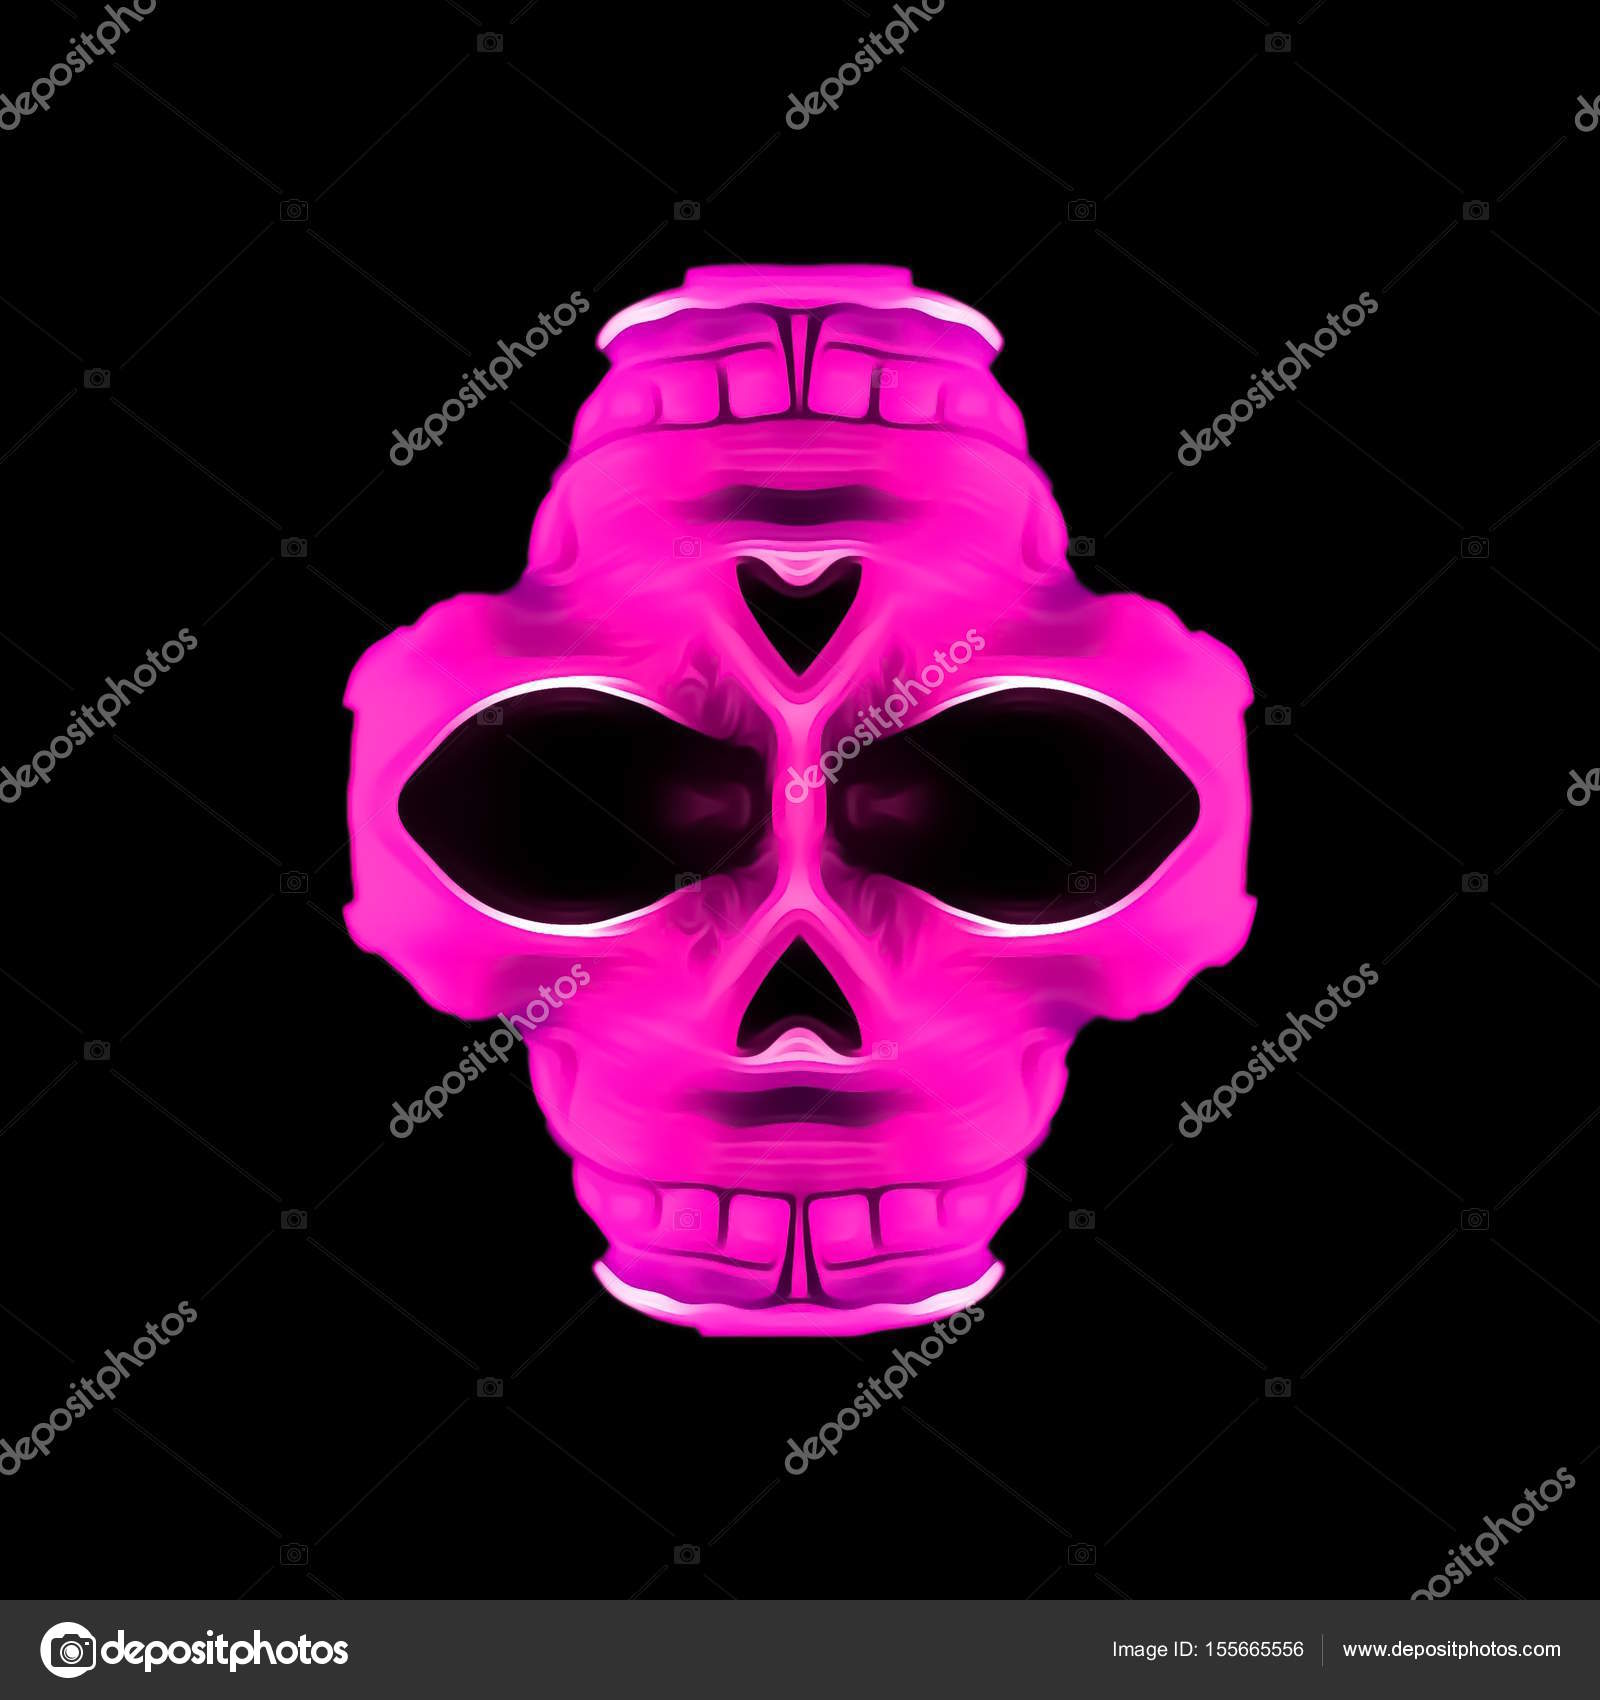 Background Pink Skull Backgrounds Psychedelic Pink Skull